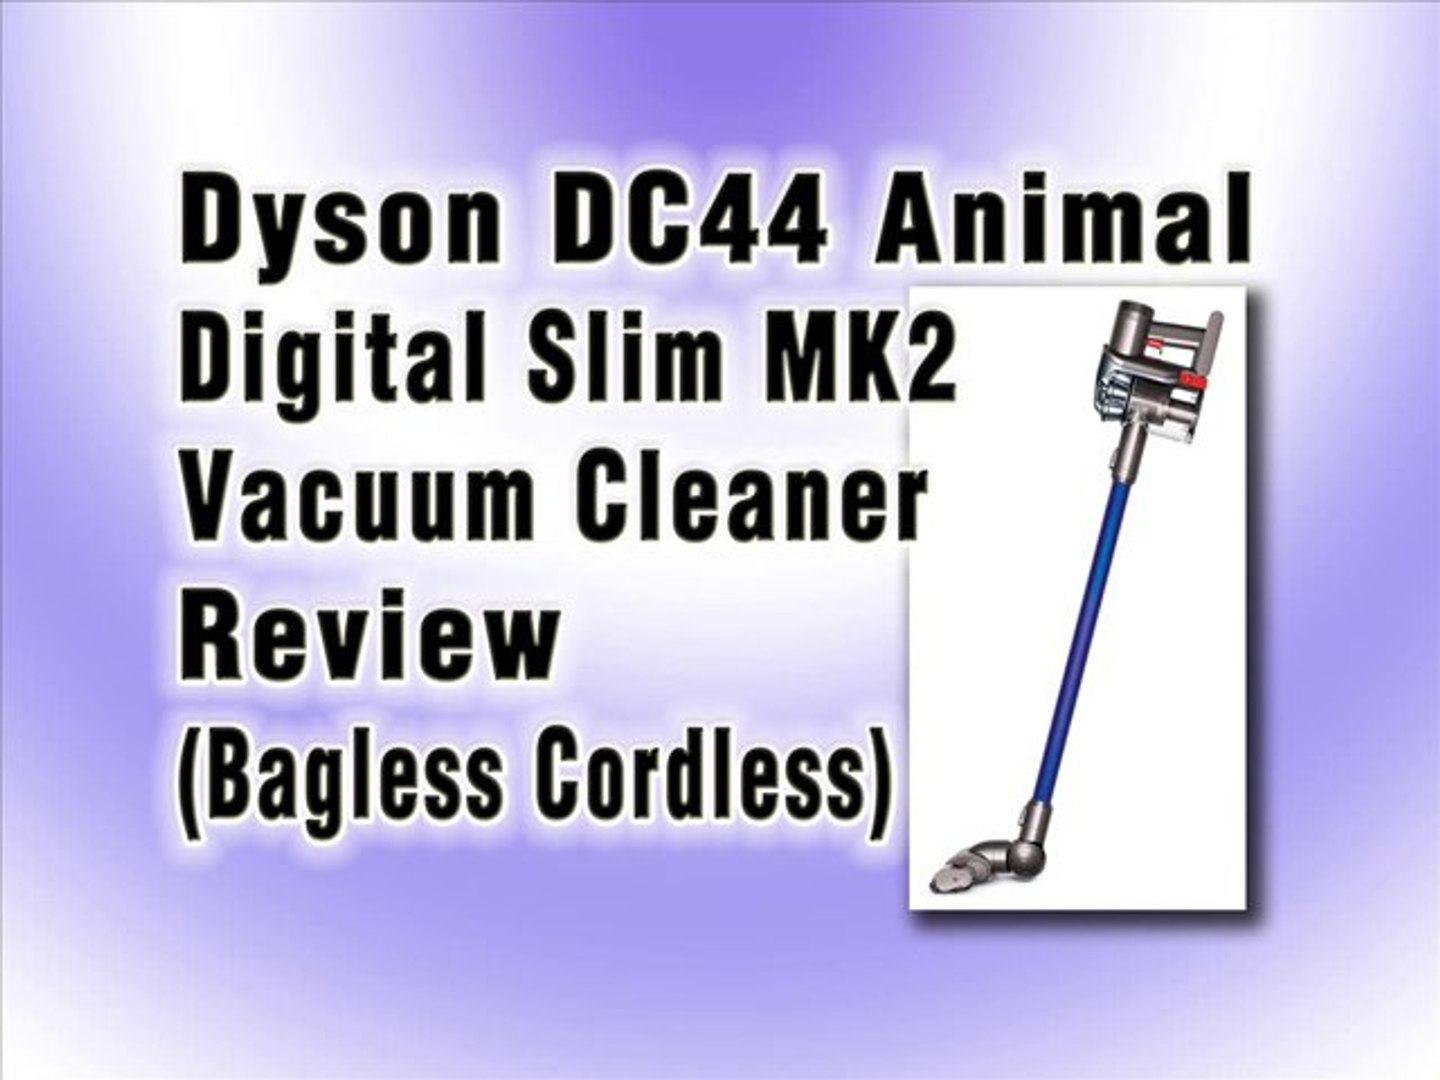 Dyson DC44 Animal Digital Slim MK2 Vacuum Cleaner Review : Best Cordless  Bagless Stick Vacuum Reviews - video Dailymotion